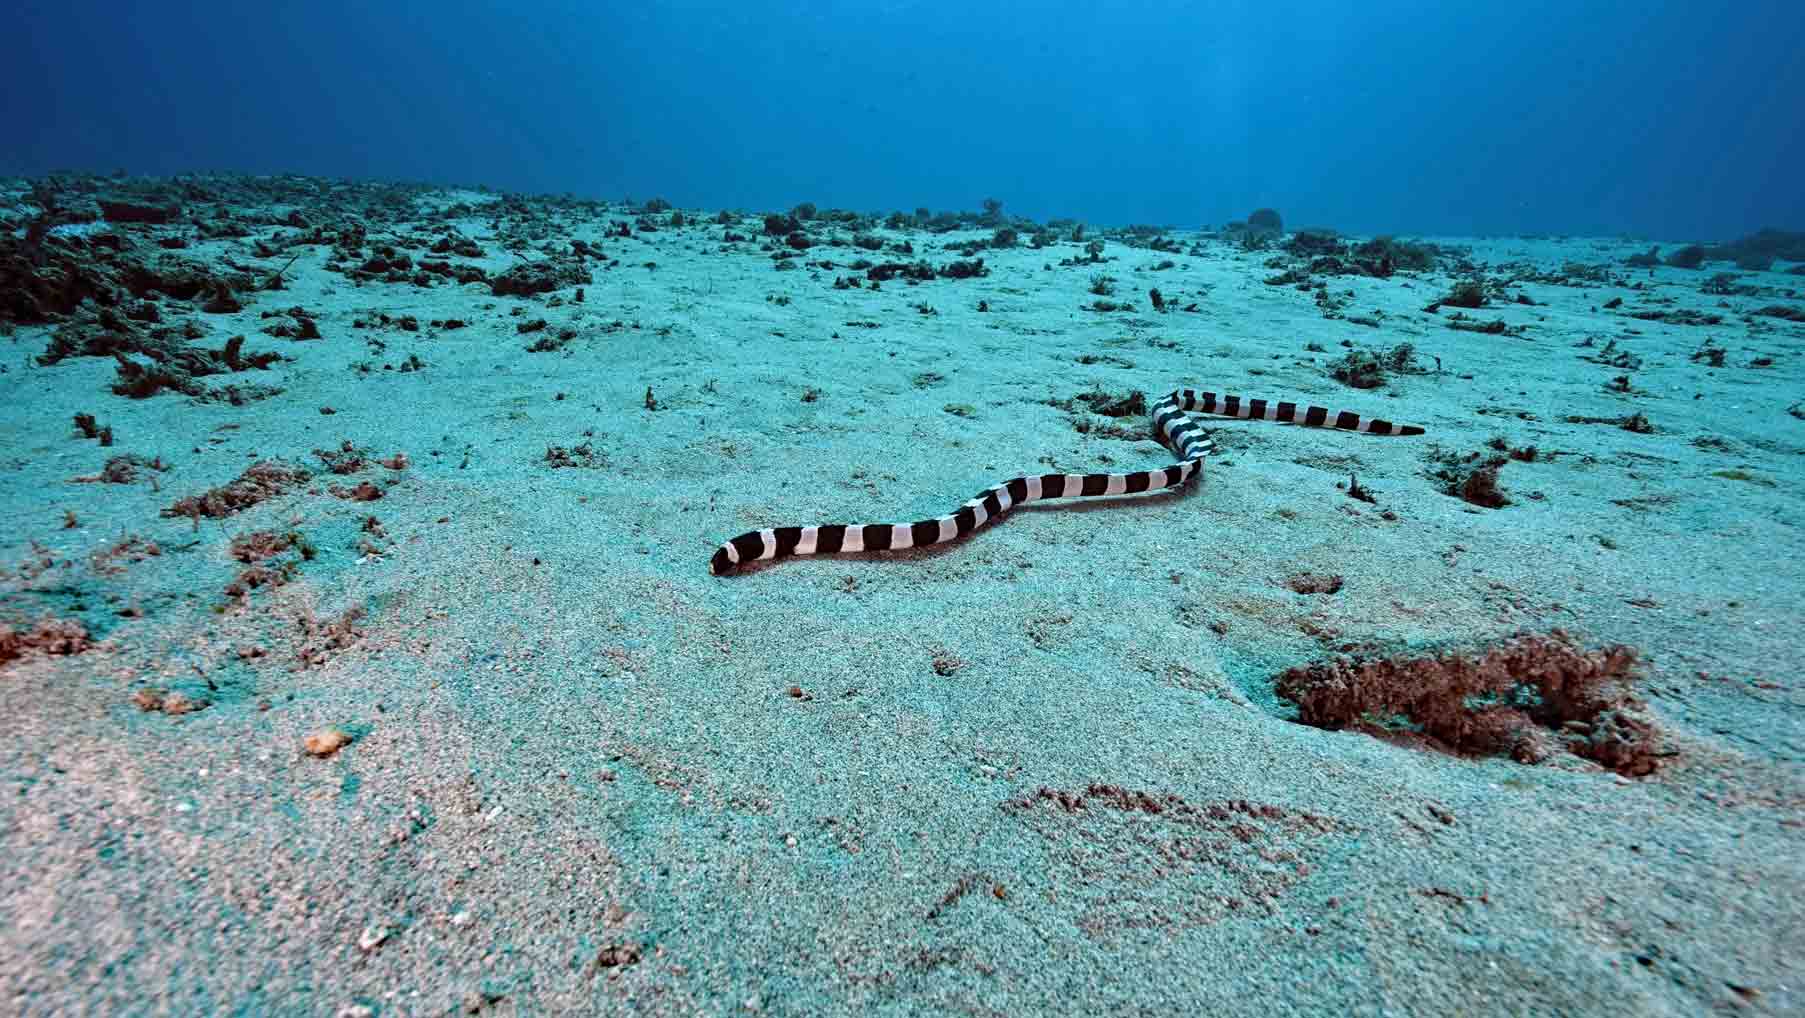 Sea snake in Padang bai on a sandy bottom